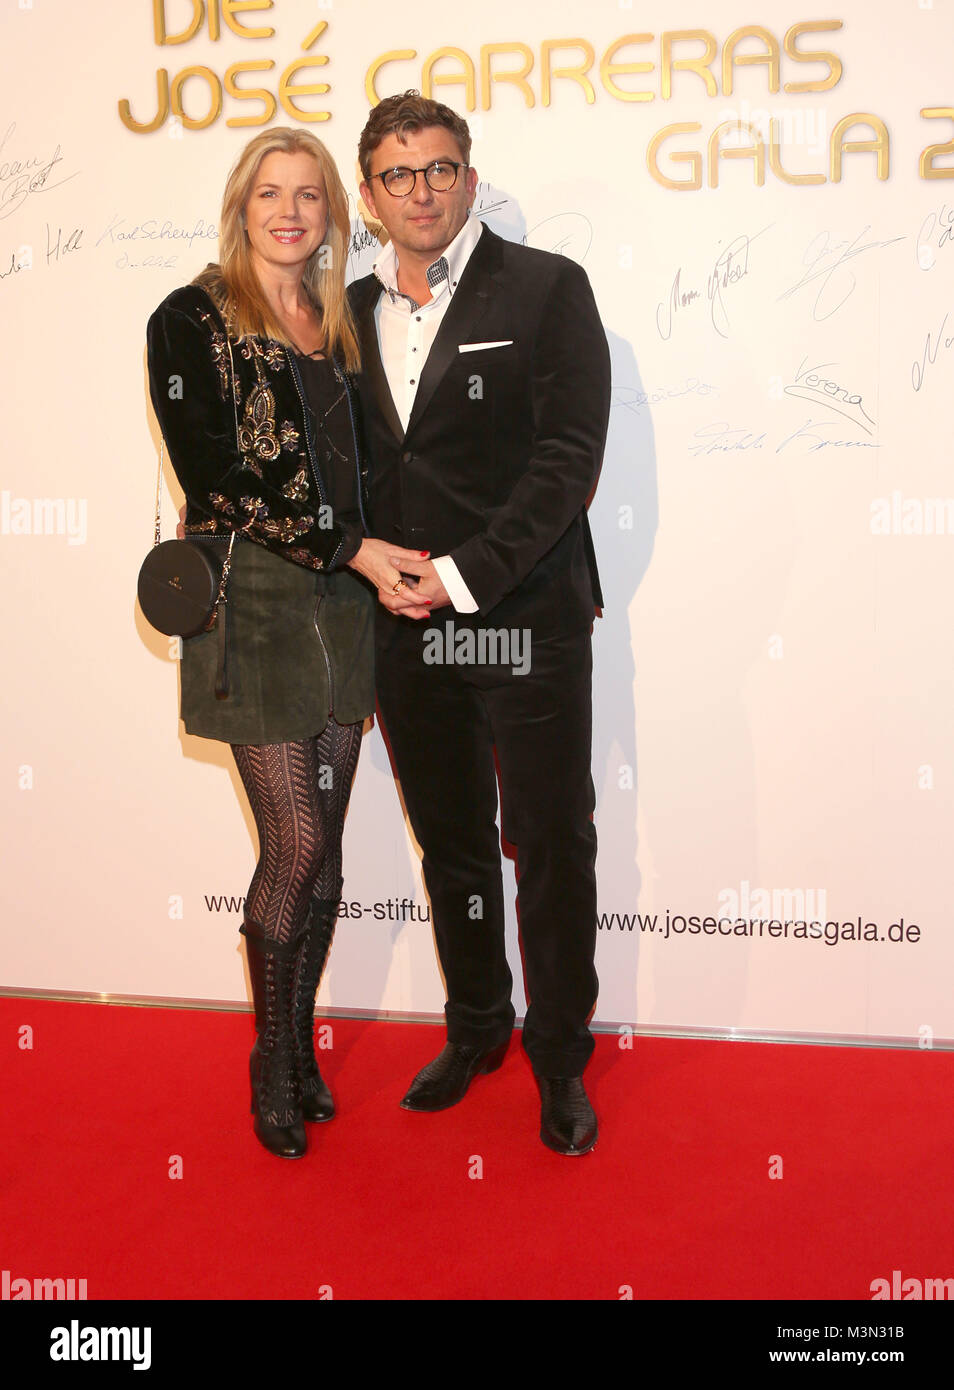 Hans Sigl mit Ehefrau Susanne Sigl, Jose Carreras Gala im Estrel Hotel Berlin am 14.12.2016 Stockfoto